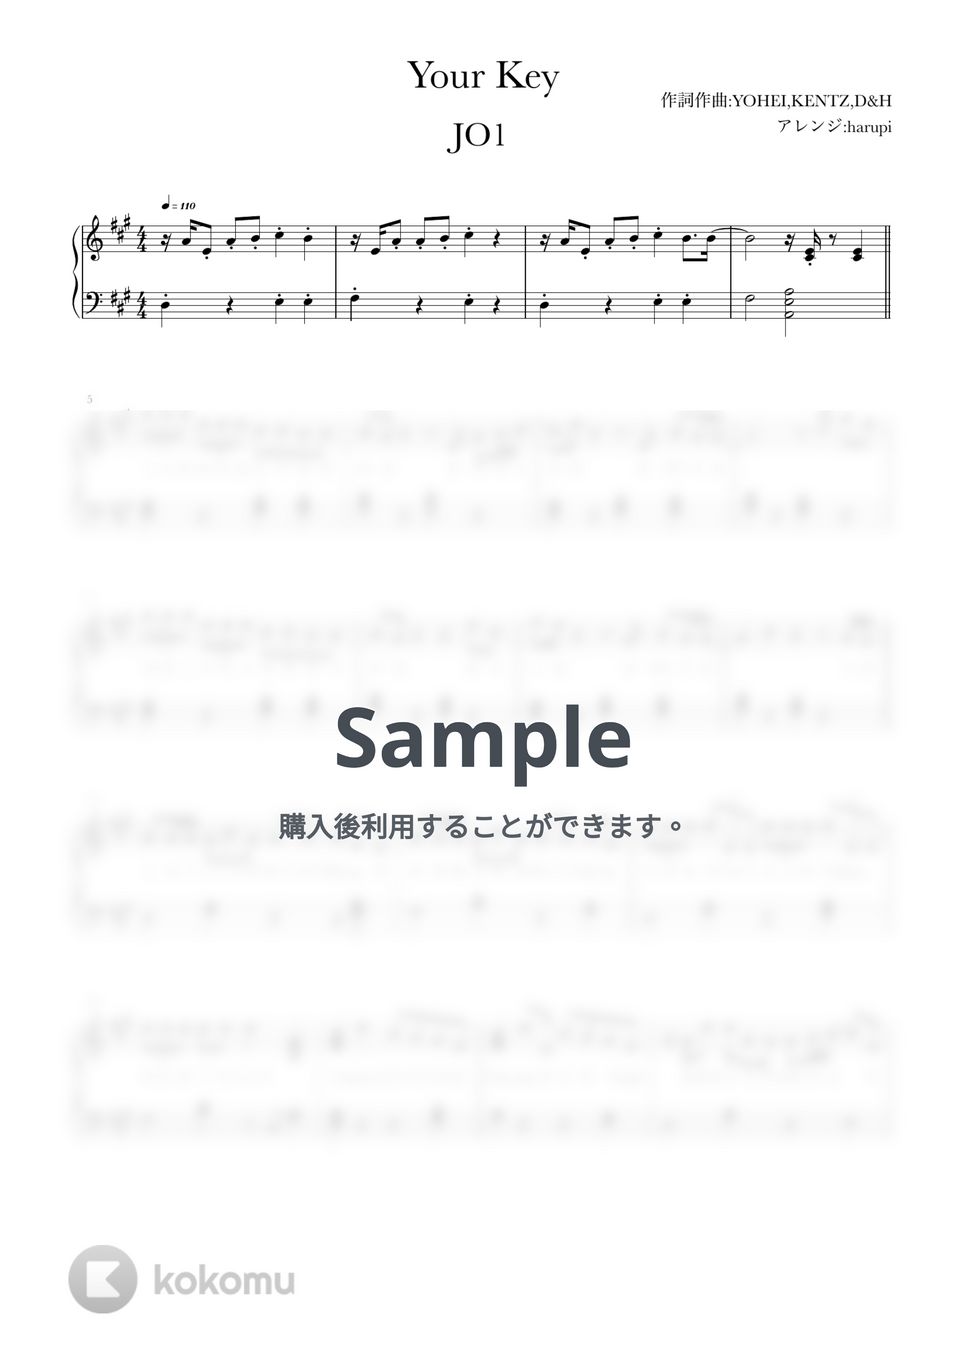 JO1 - Your Key (ピアノJO1，your keykey) by harupi